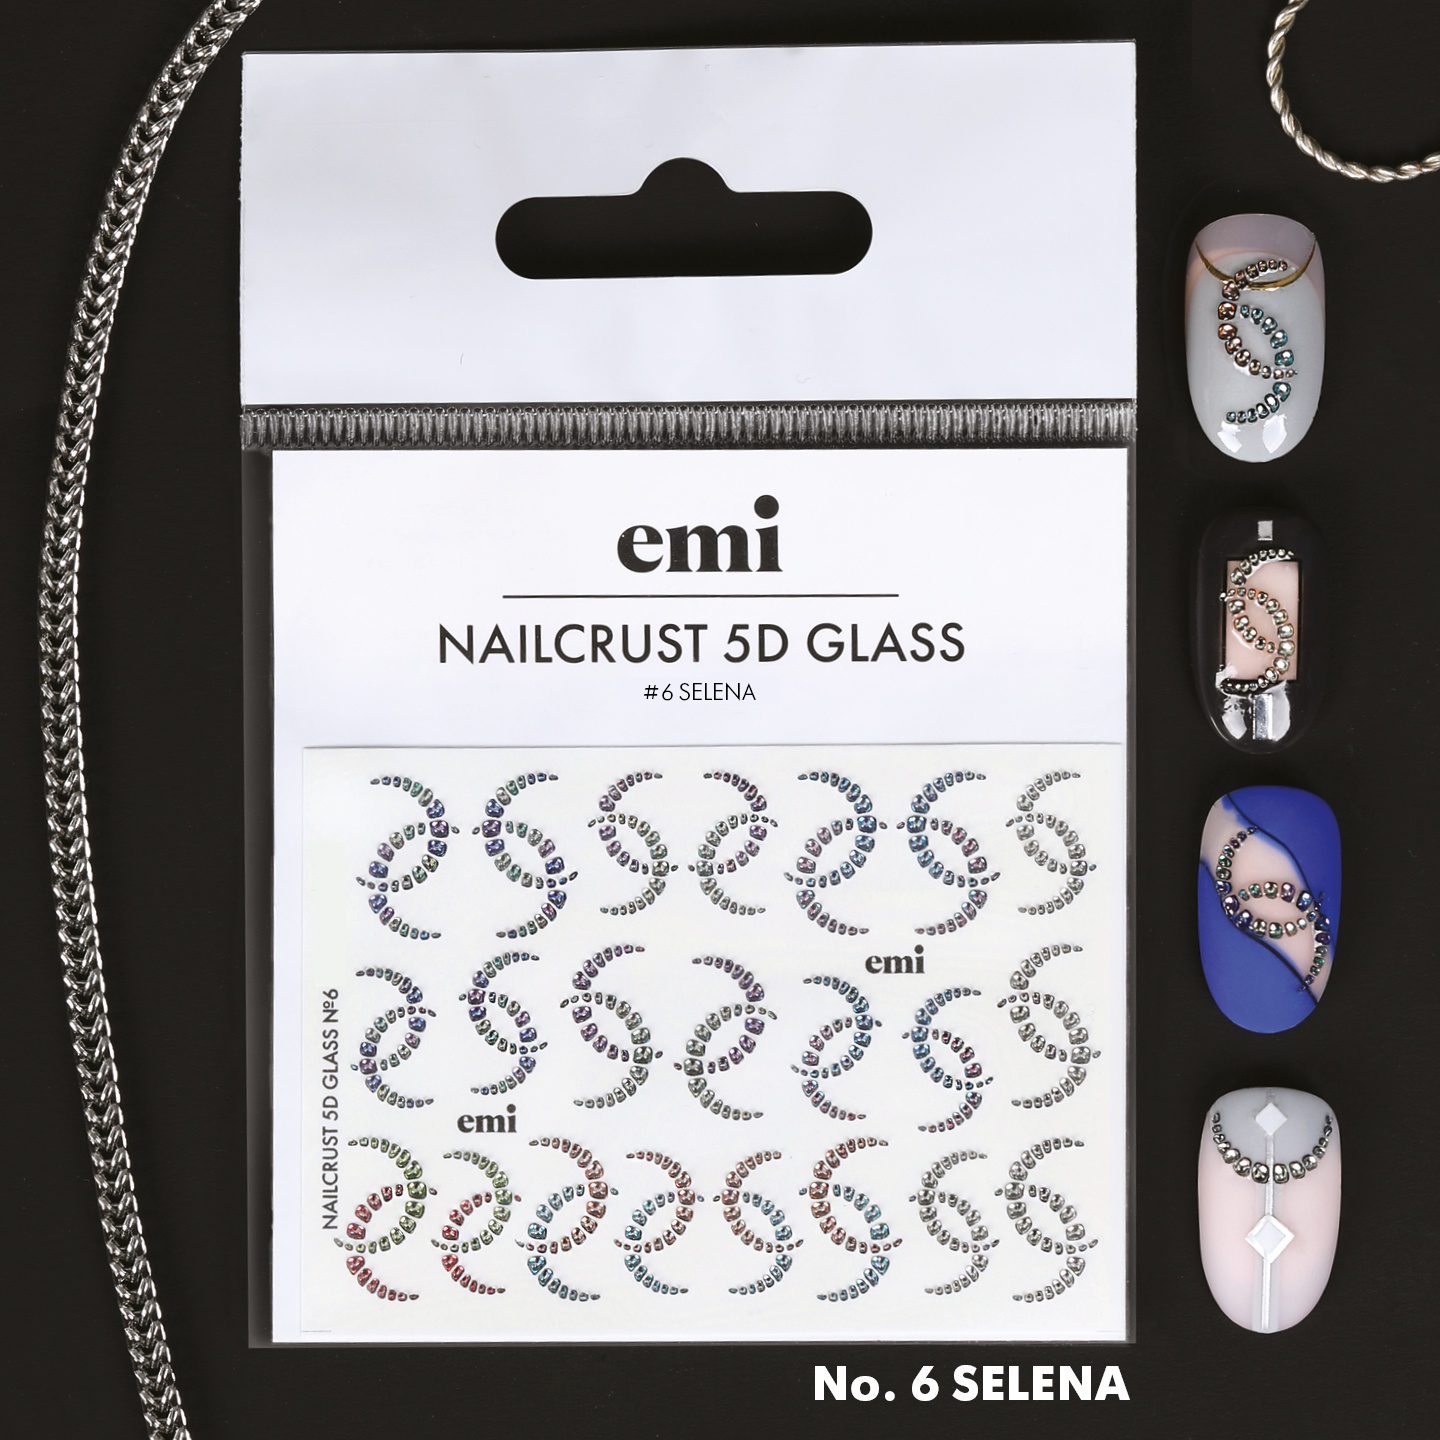 5D Glass Nailcrust #6 Selena